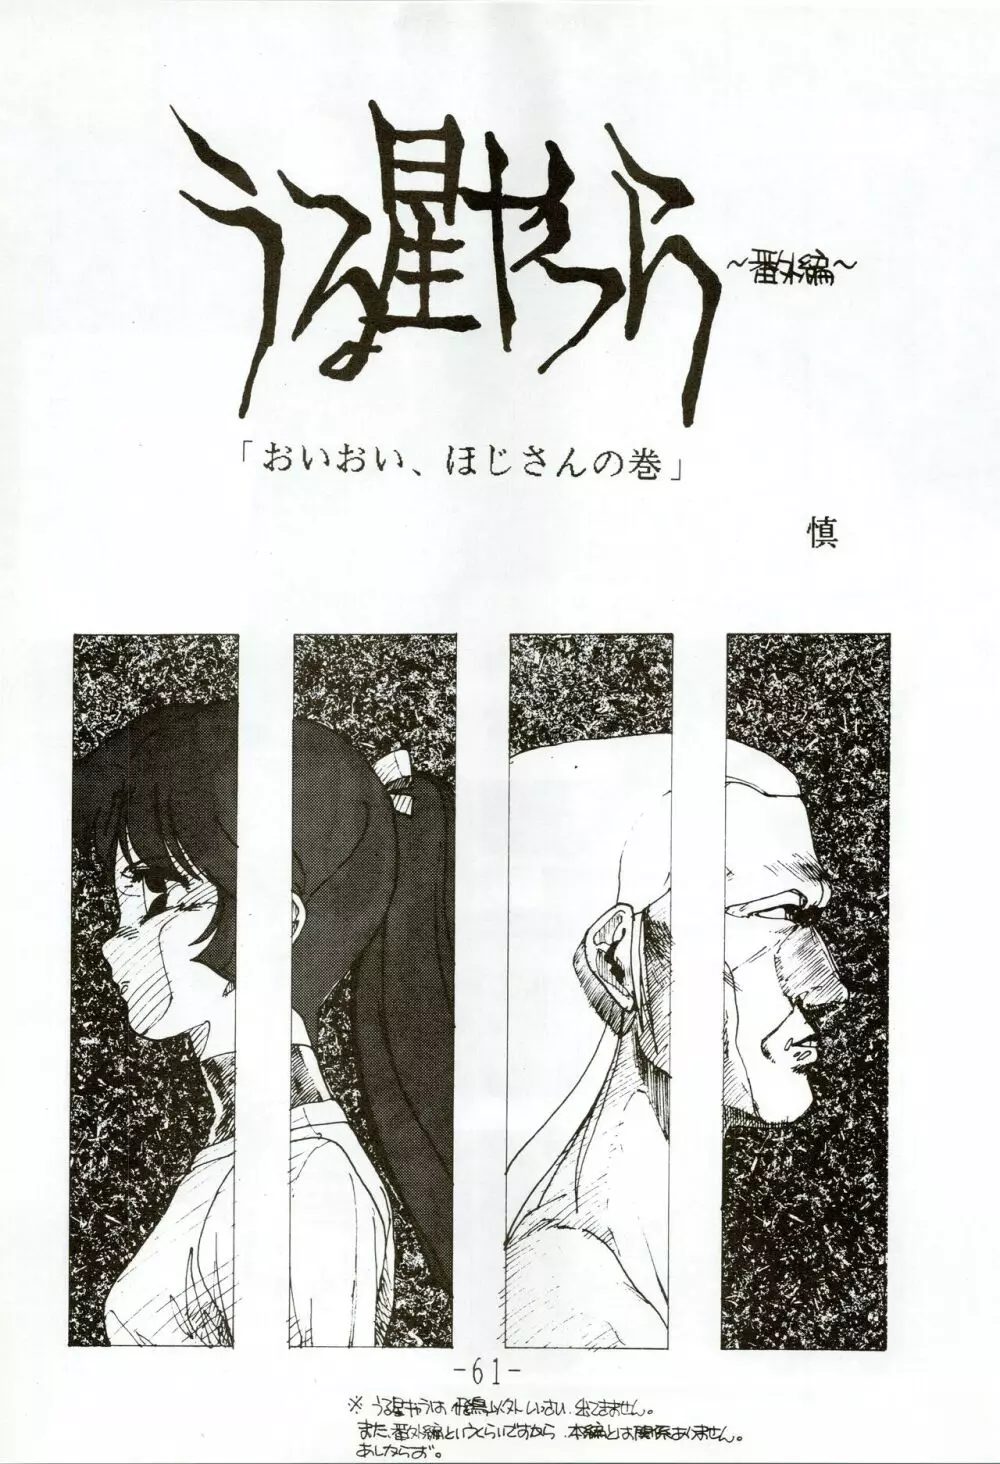 甲冑伝説 - page61